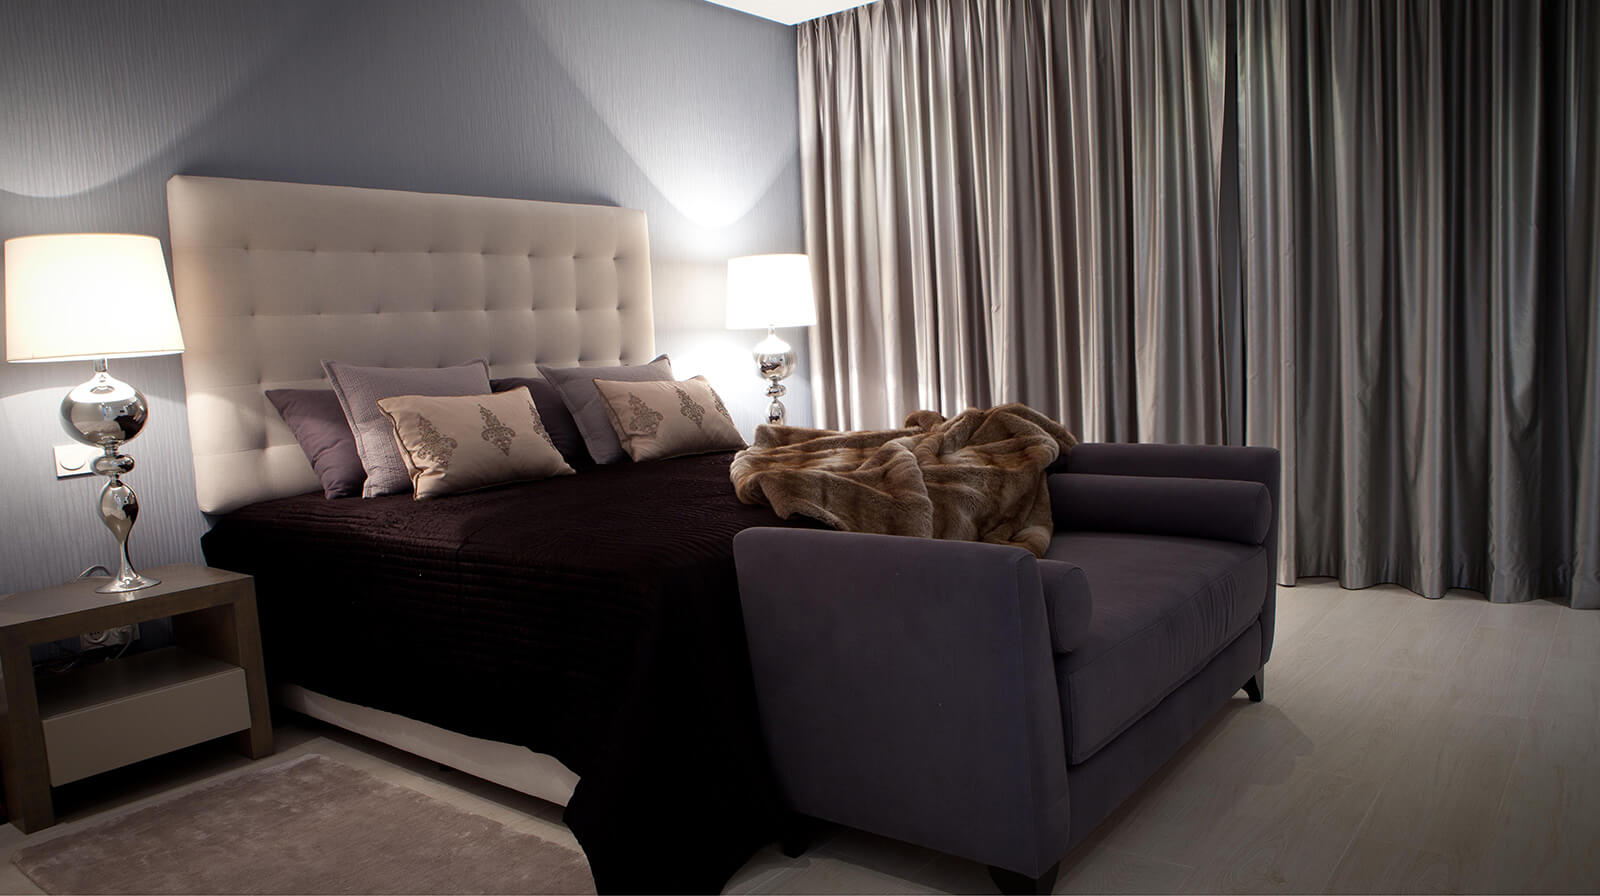 Bachelor Dream Villa bedroom